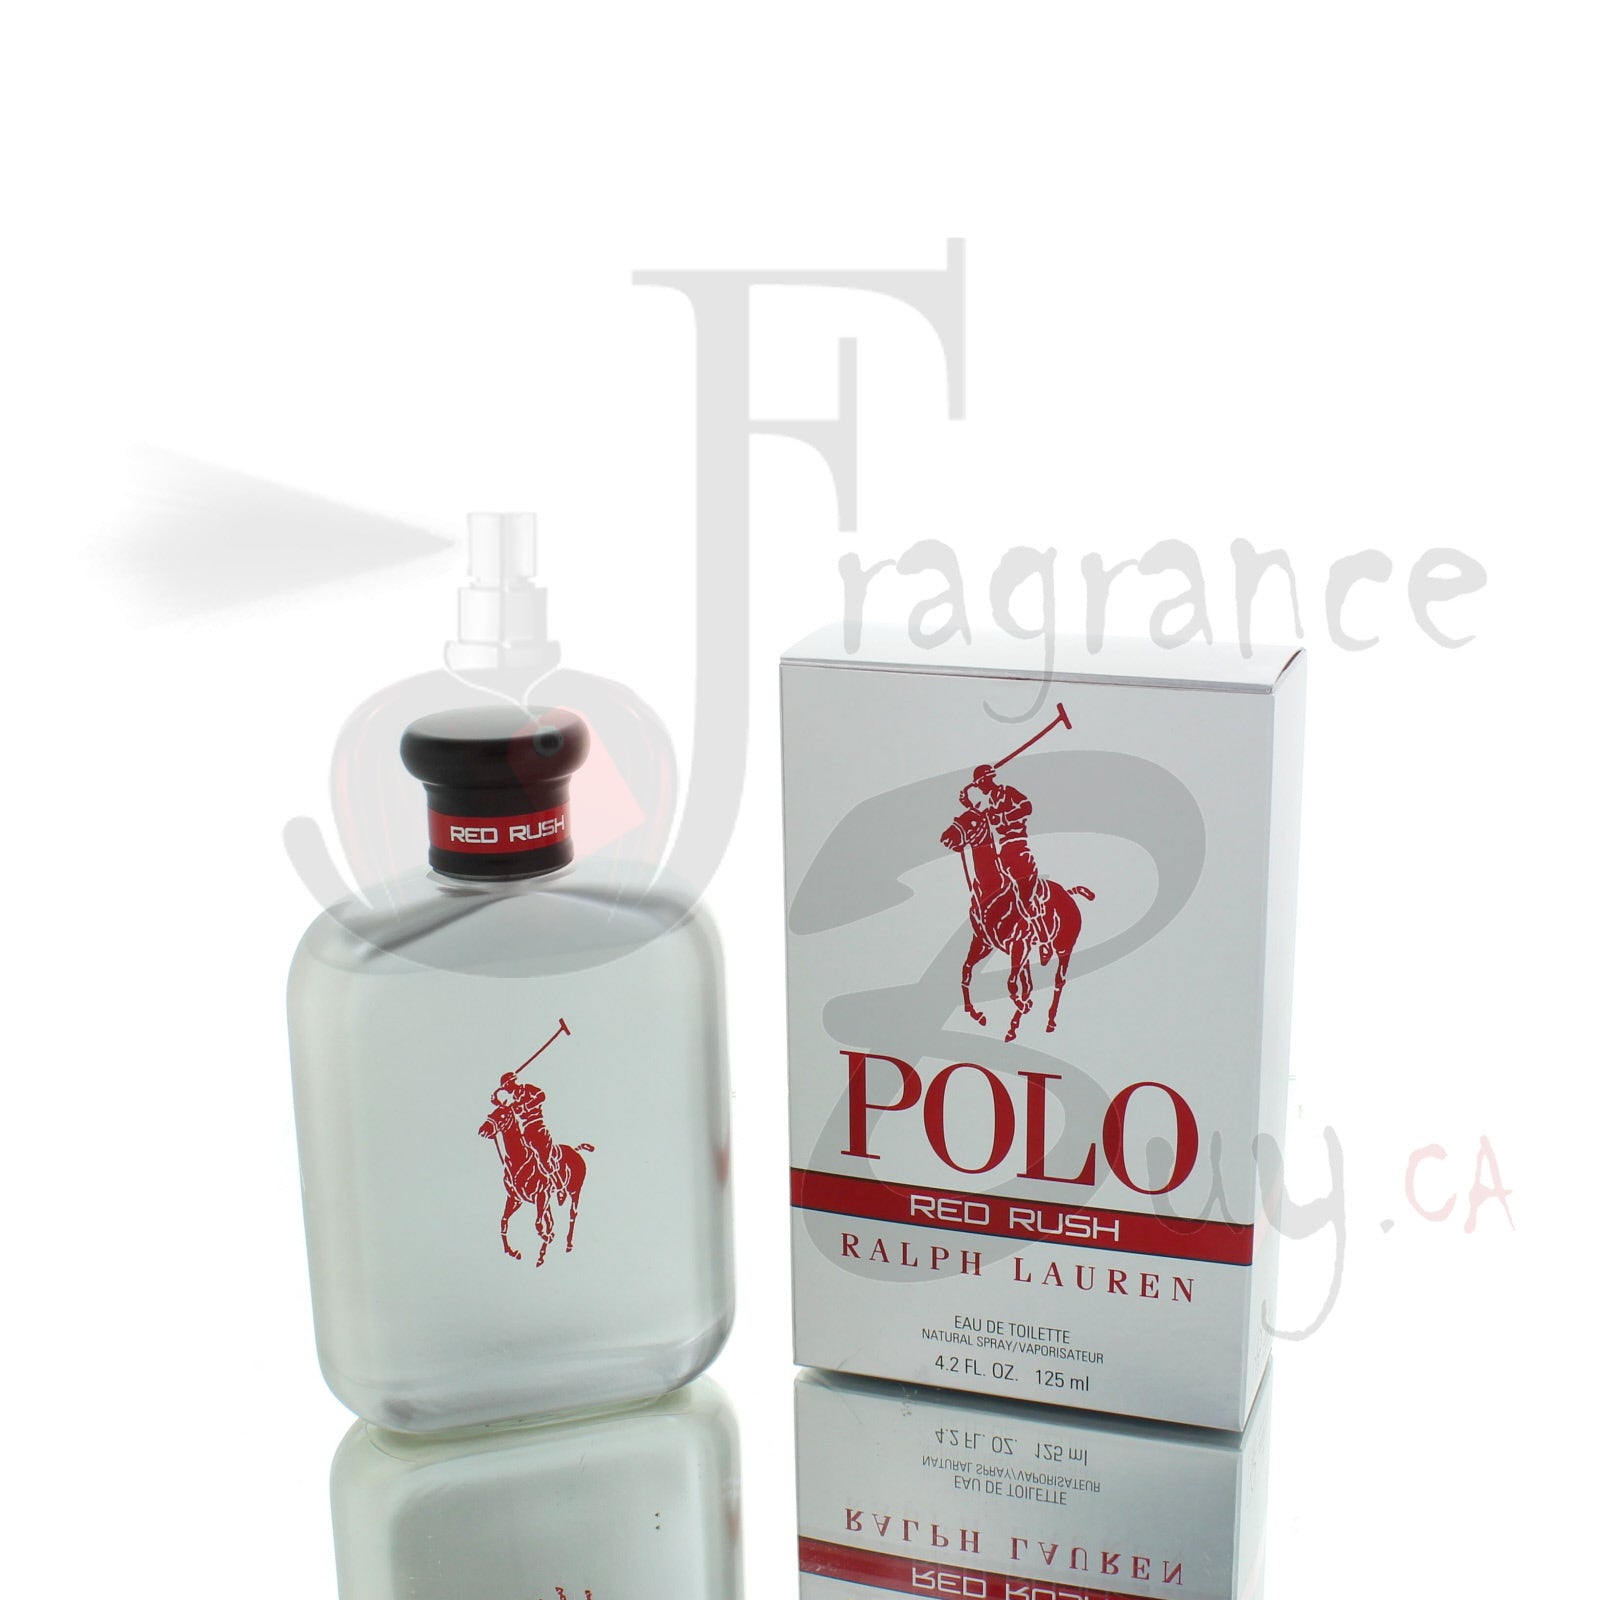  — Ralph Lauren Polo Red Rush Man | Best Price, Fragrancebuy  Canada